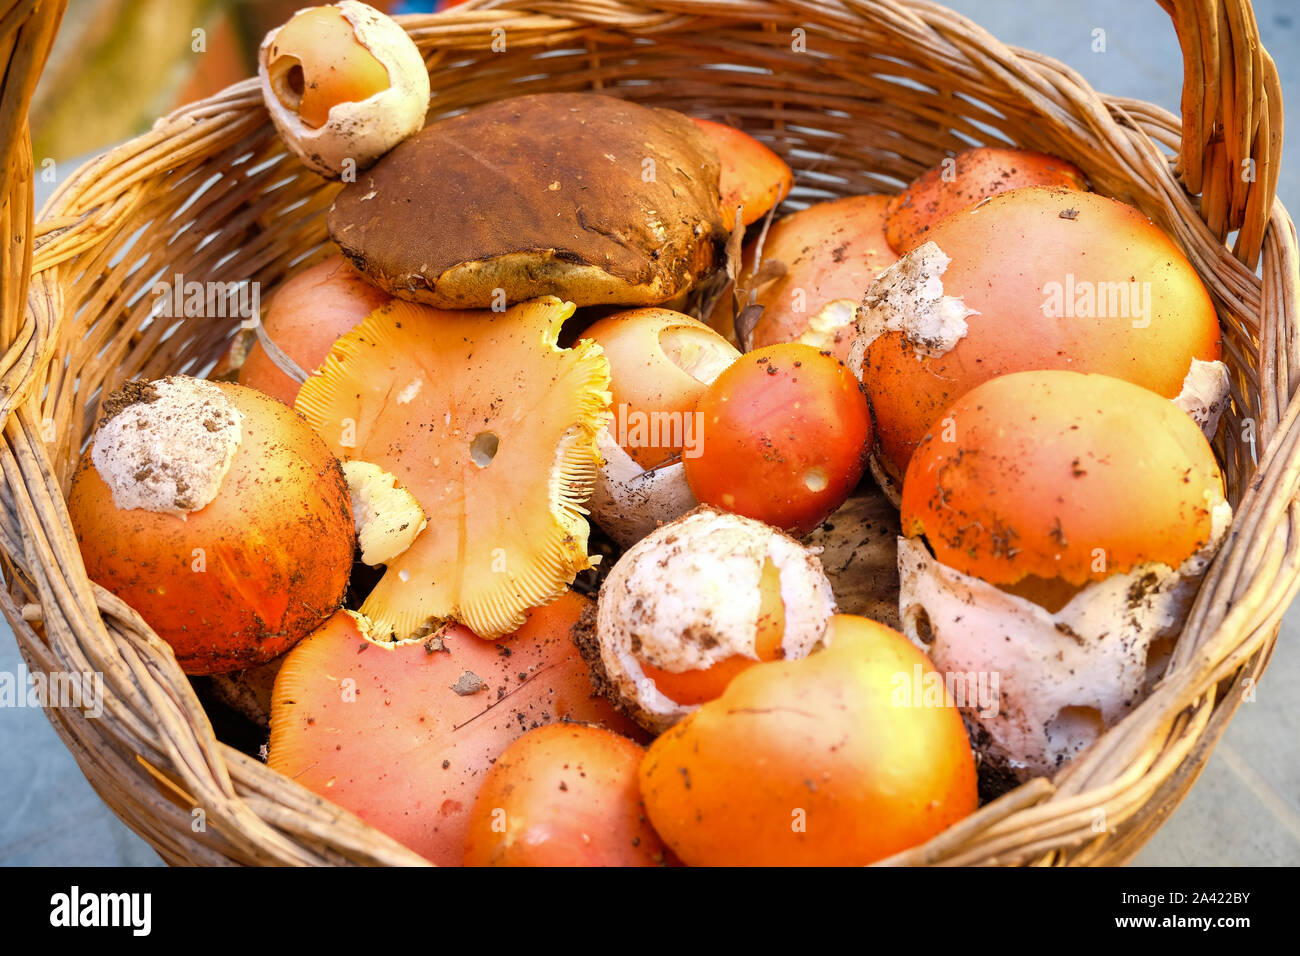 Autumn wild mushrooms composition. boletus edulis fungi,seasonal ingredients Stock Photo